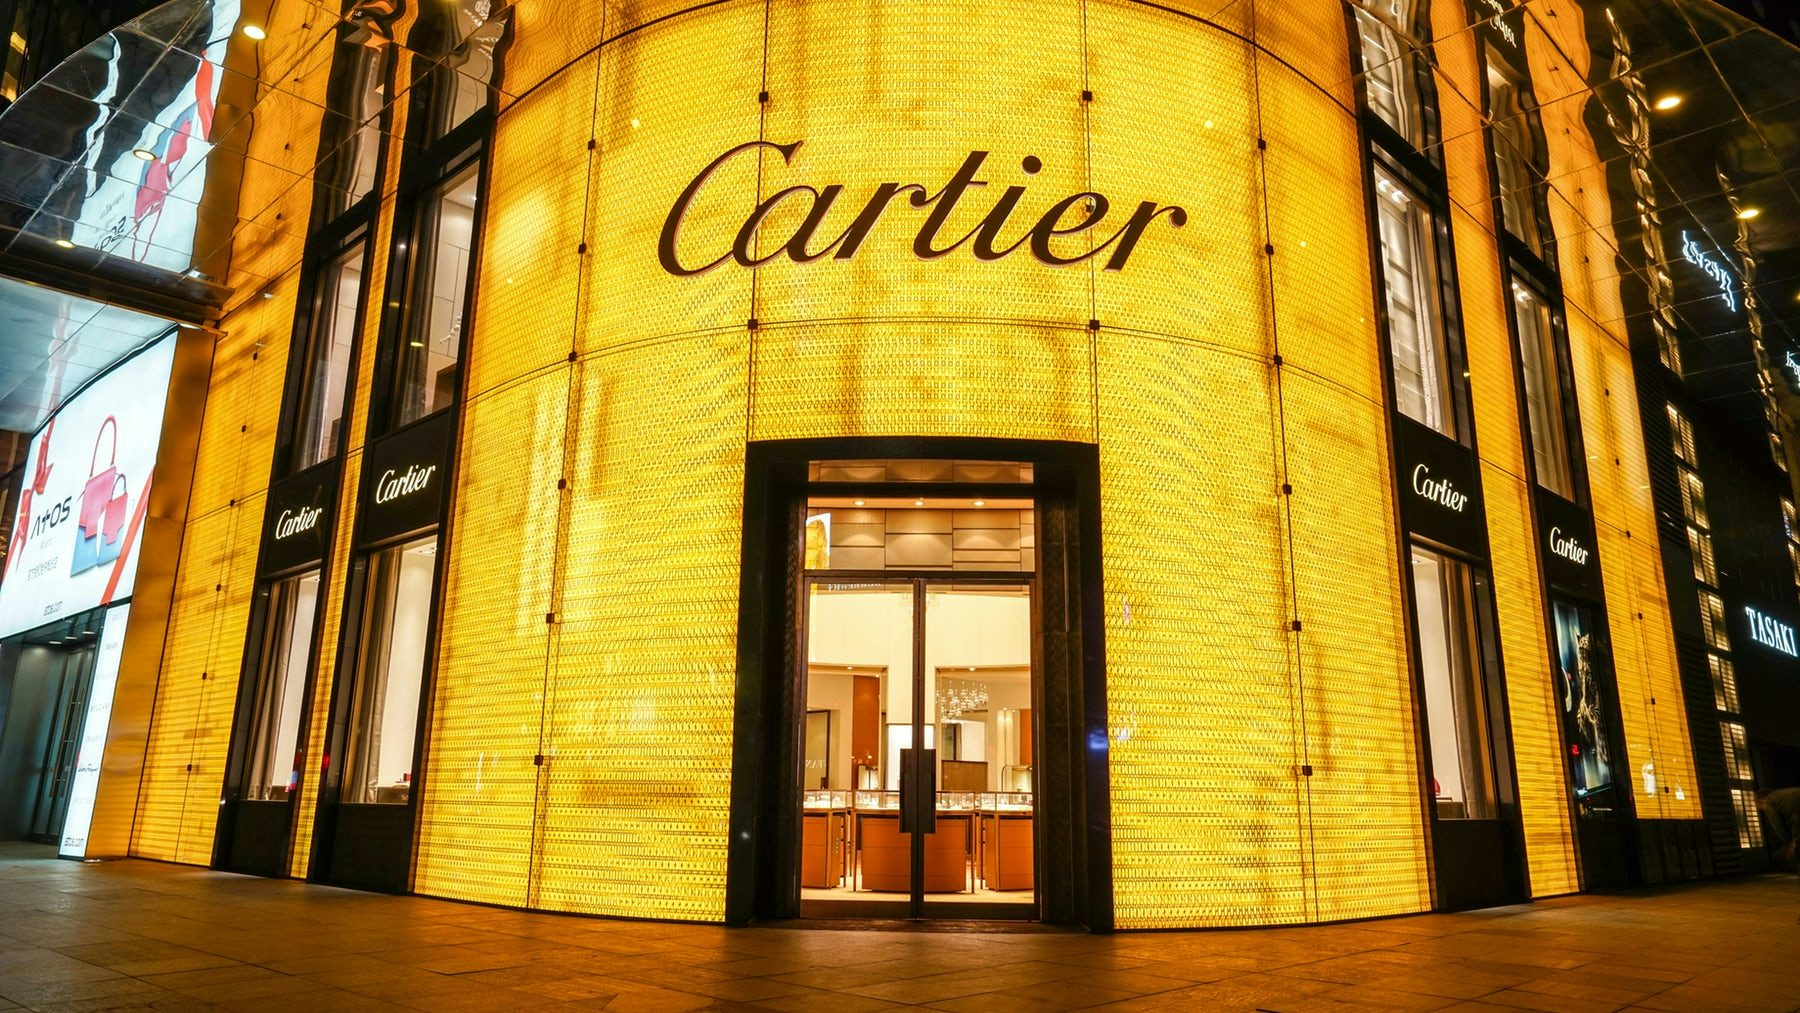 Cartier store front in Shanghai. Shutterstock.